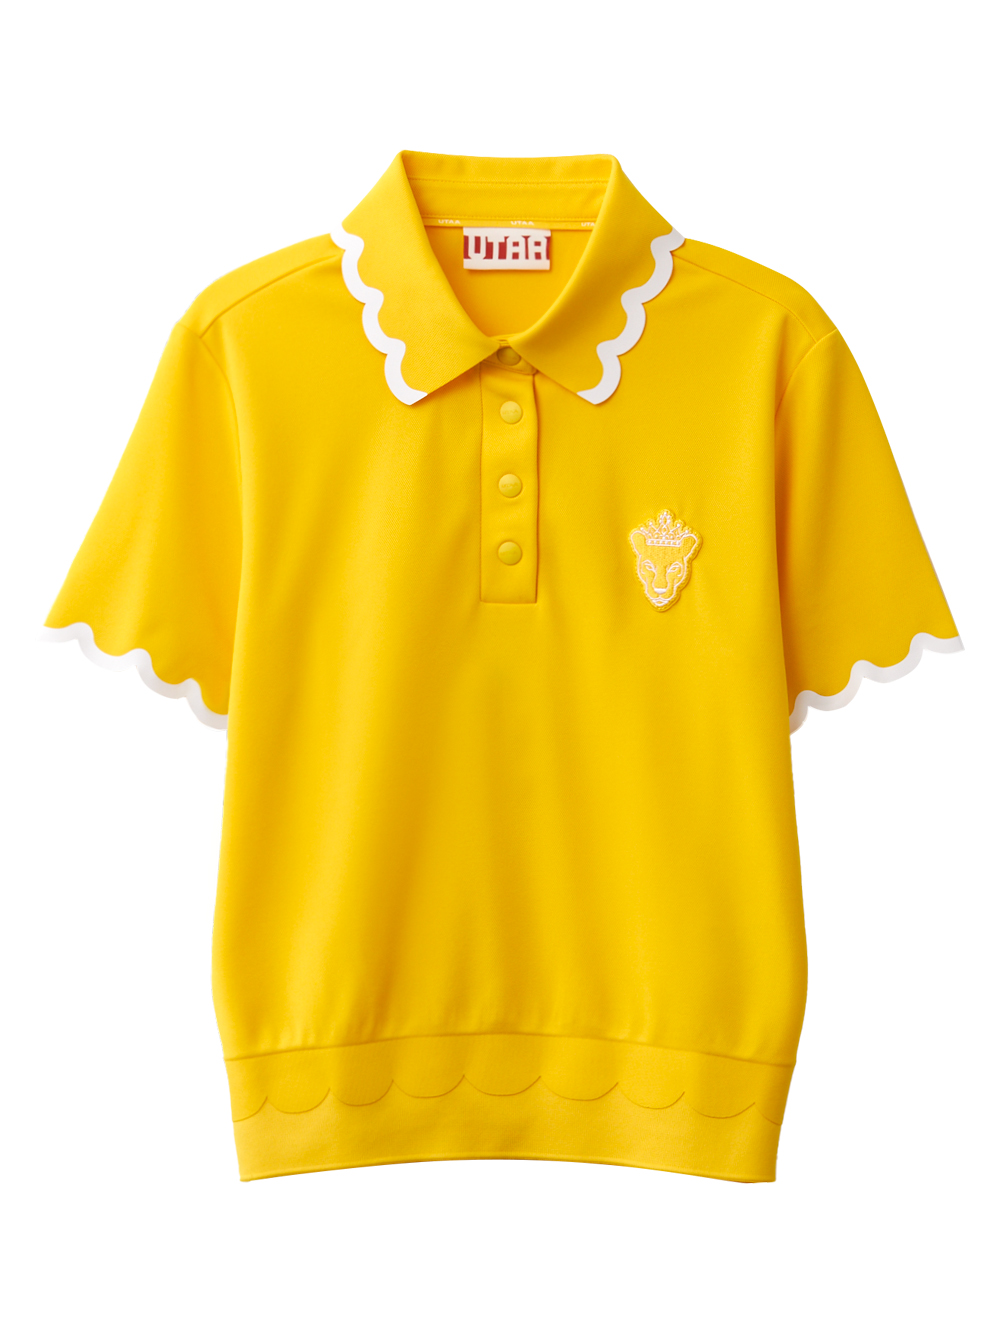 UTAA Tilde Wave Crown Panther T-Shirt : Yellow  (UC3STF260YE)